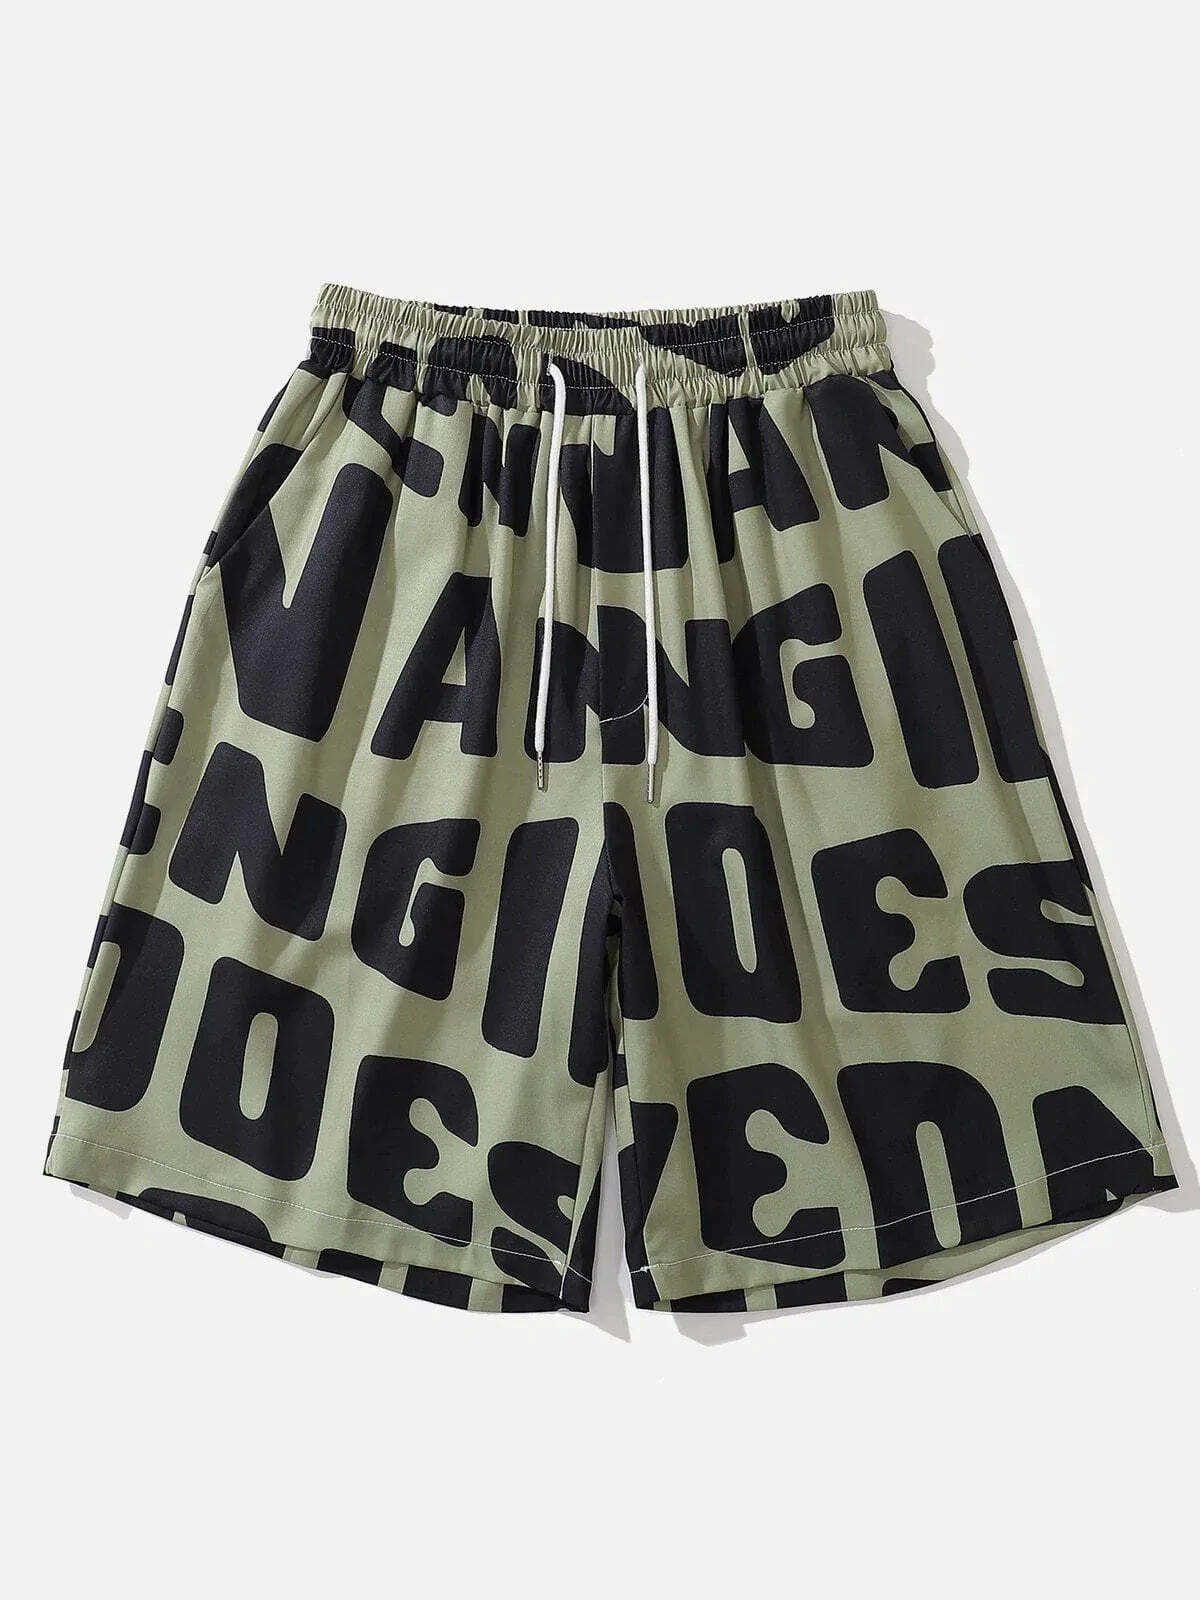 printed graffiti denim shorts edgy streetwear essential 4178